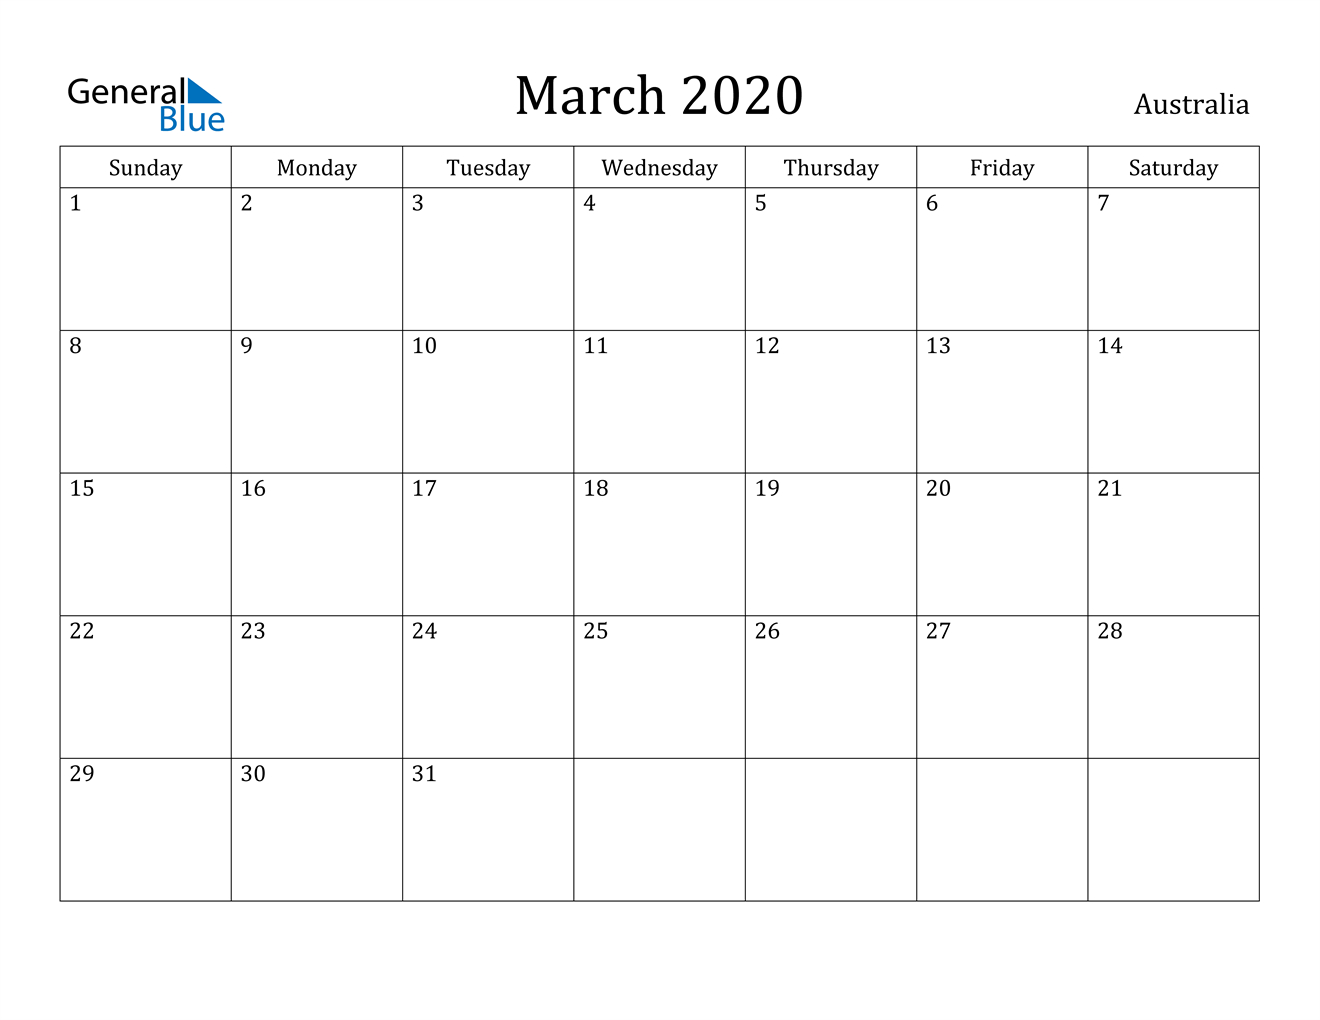 March 2020 Calendar - Australia